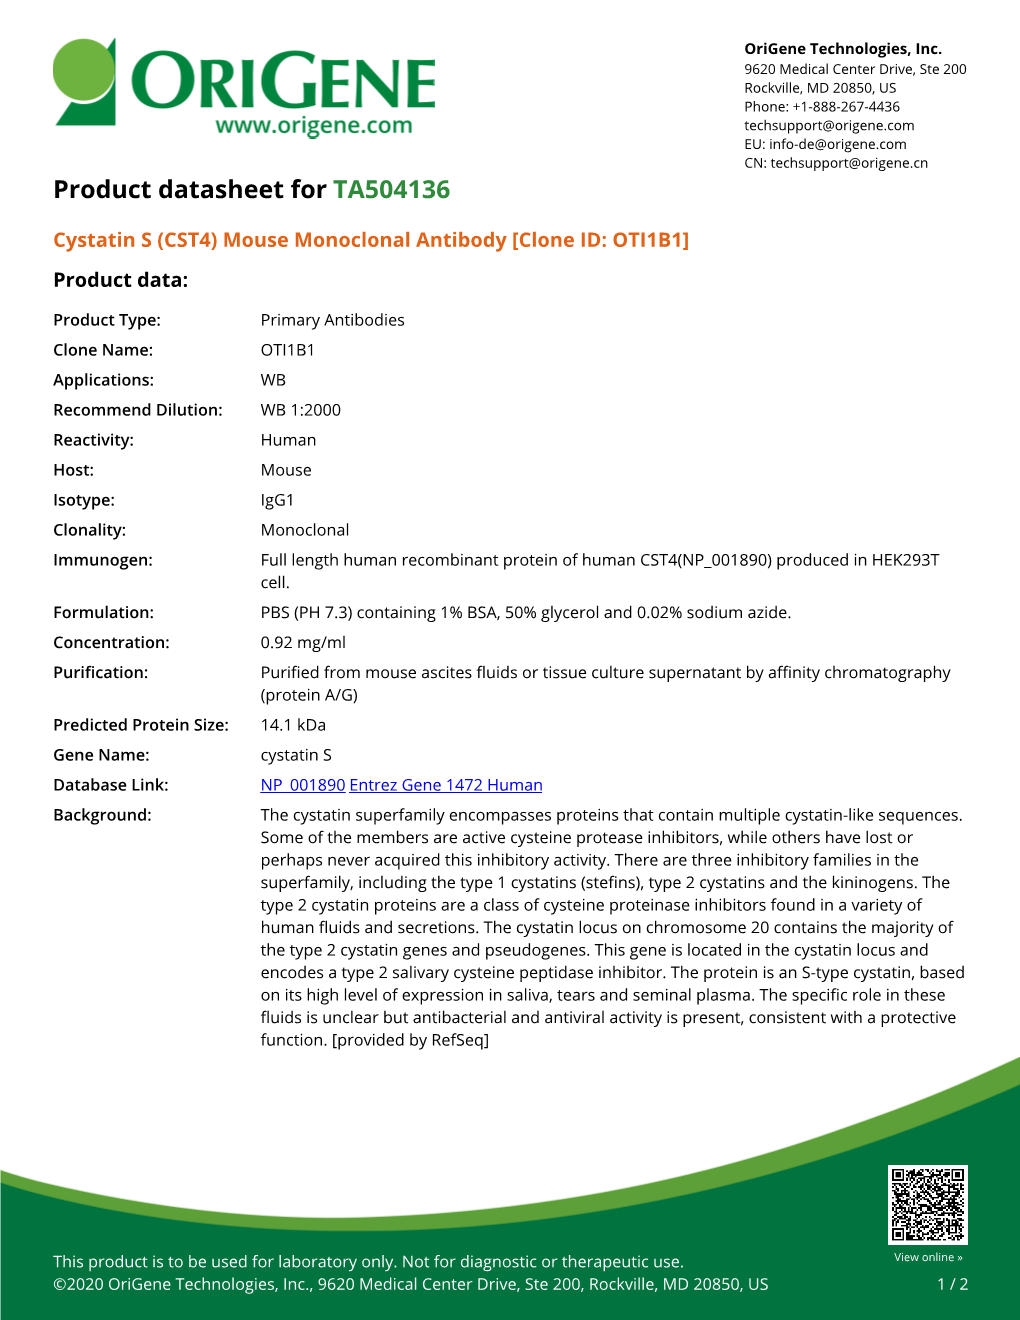 Cystatin S (CST4) Mouse Monoclonal Antibody [Clone ID: OTI1B1] Product Data